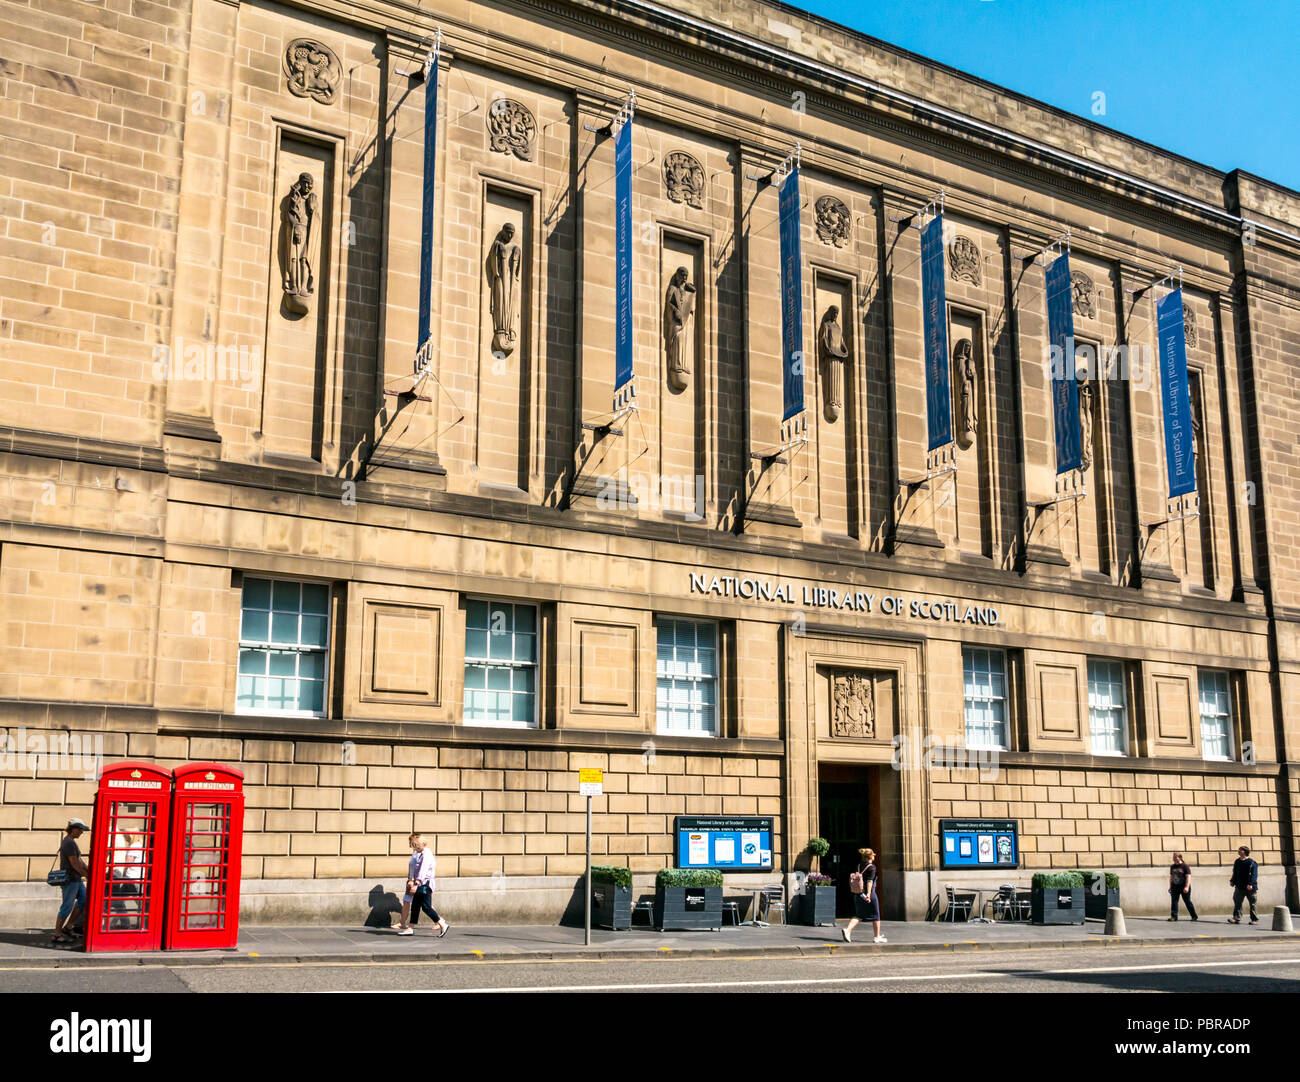 Estilo Art Deco de la Biblioteca Nacional de Escocia, el edificio de la biblioteca de depósito George IV bridge, Edimburgo, Escocia, Reino Unido, con cabinas de teléfono rojo Foto de stock